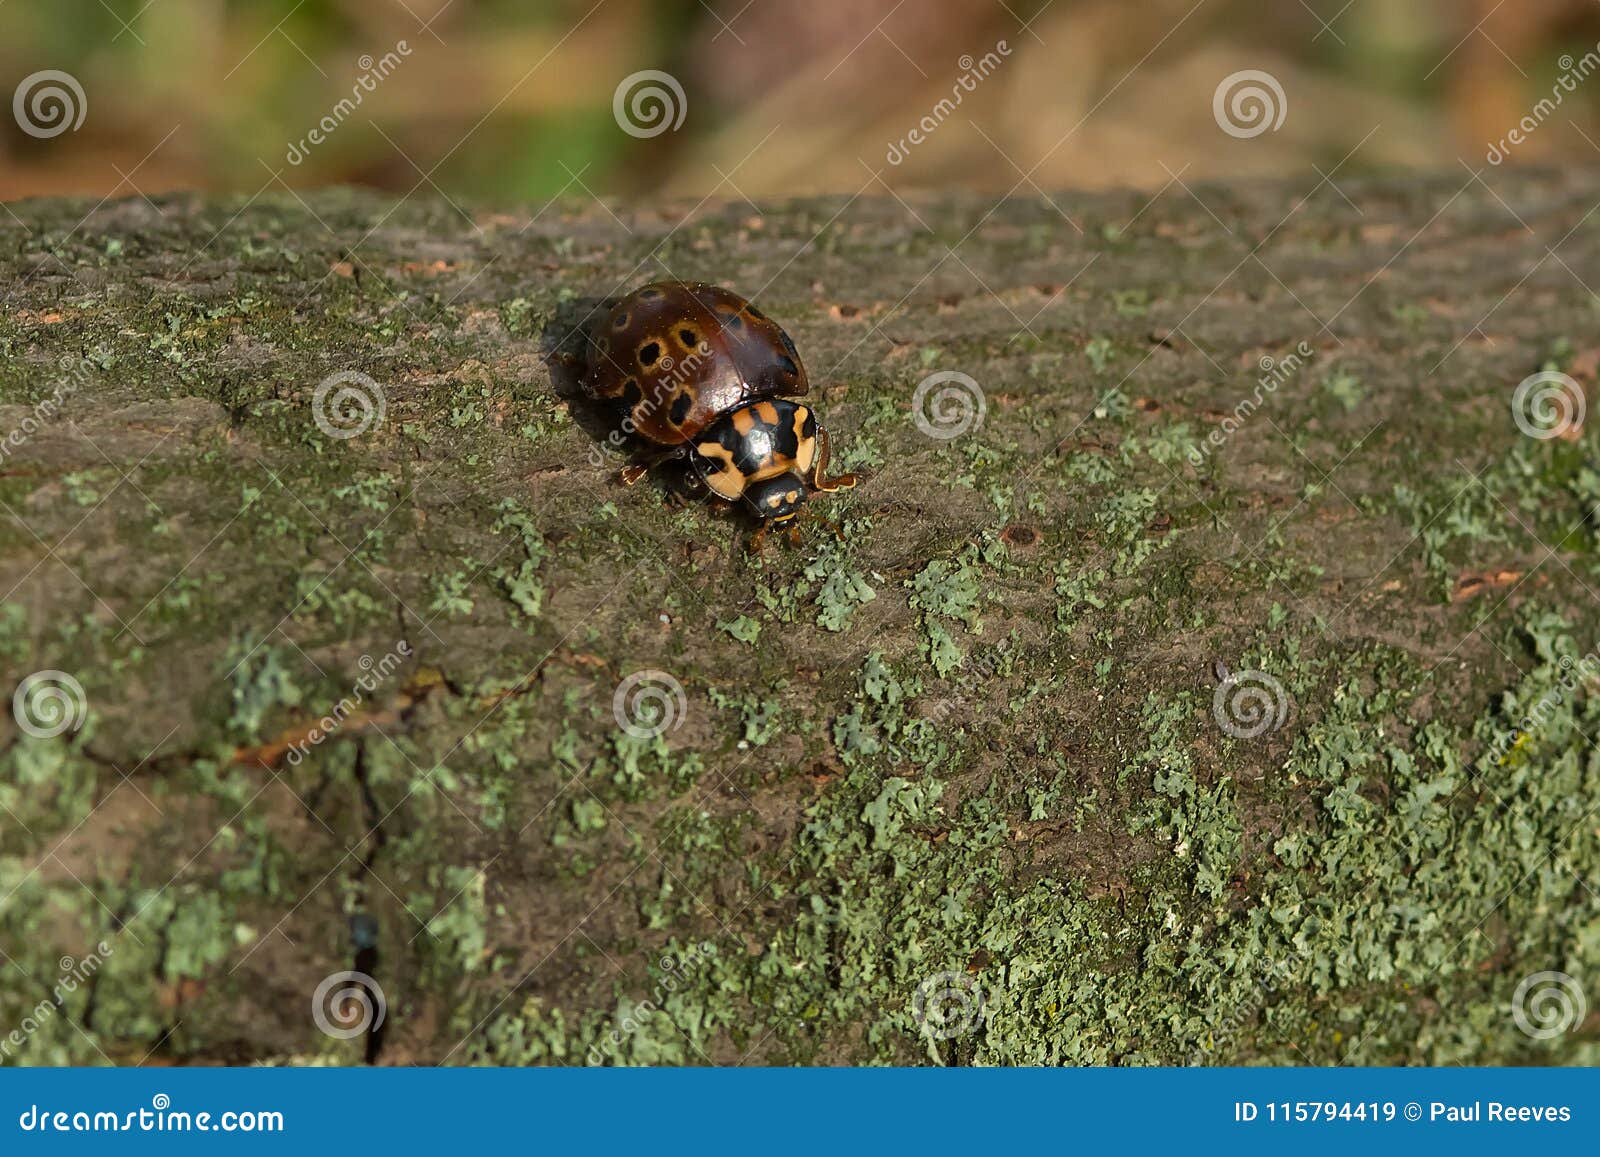 eye-spotted lady beetle - anatis mali